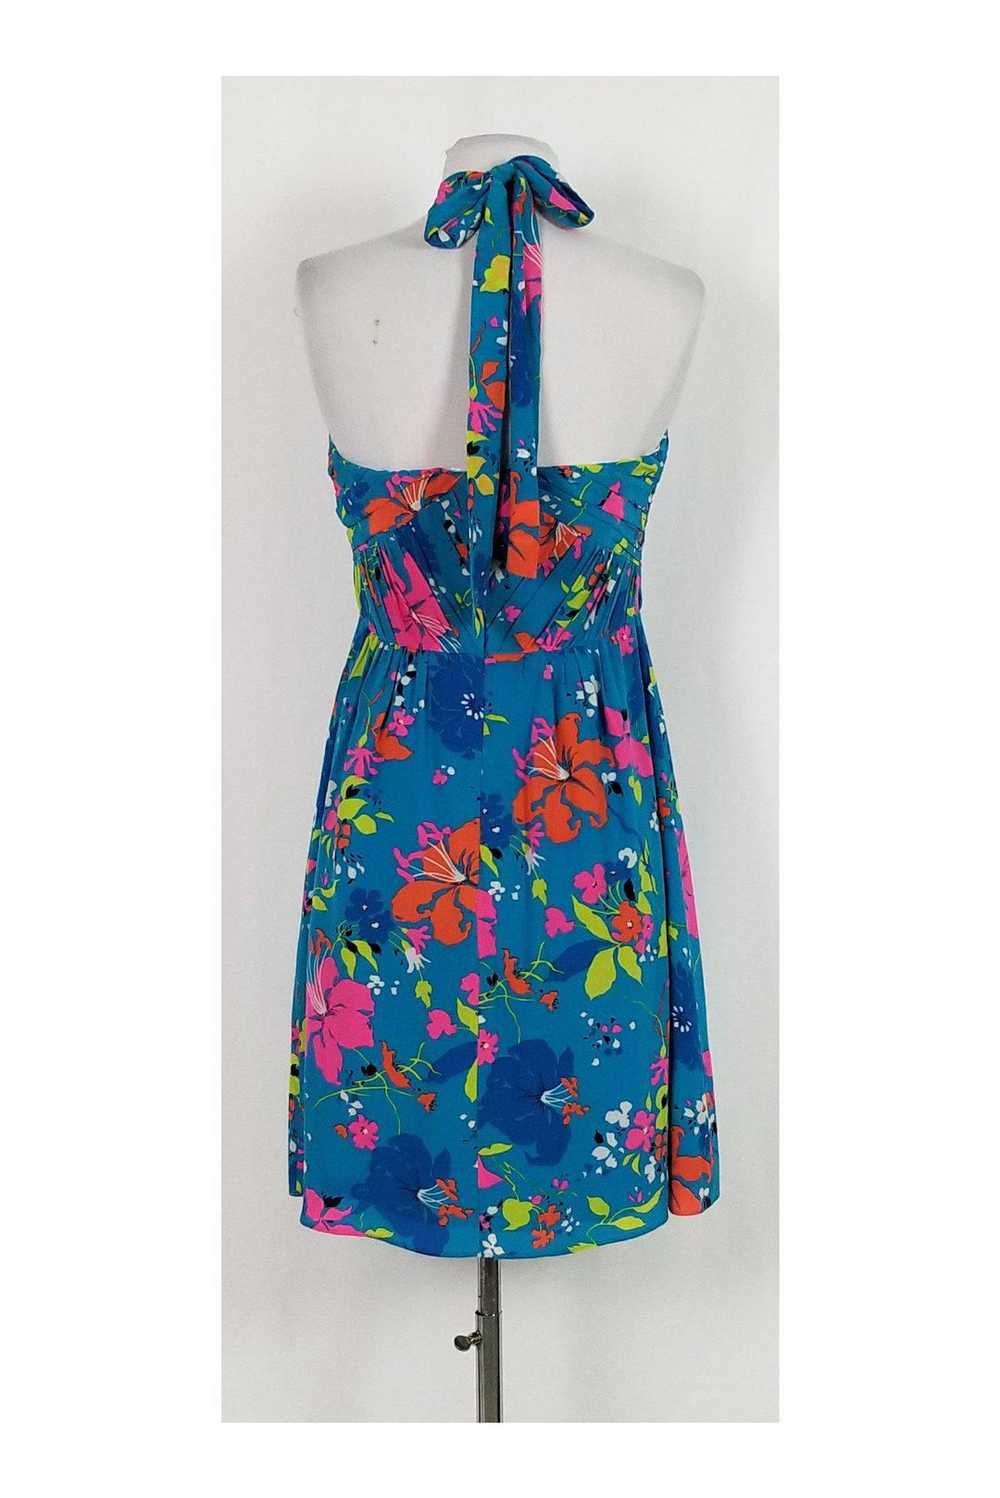 Shoshanna - Blue Floral Print Dress Sz 6 - image 3